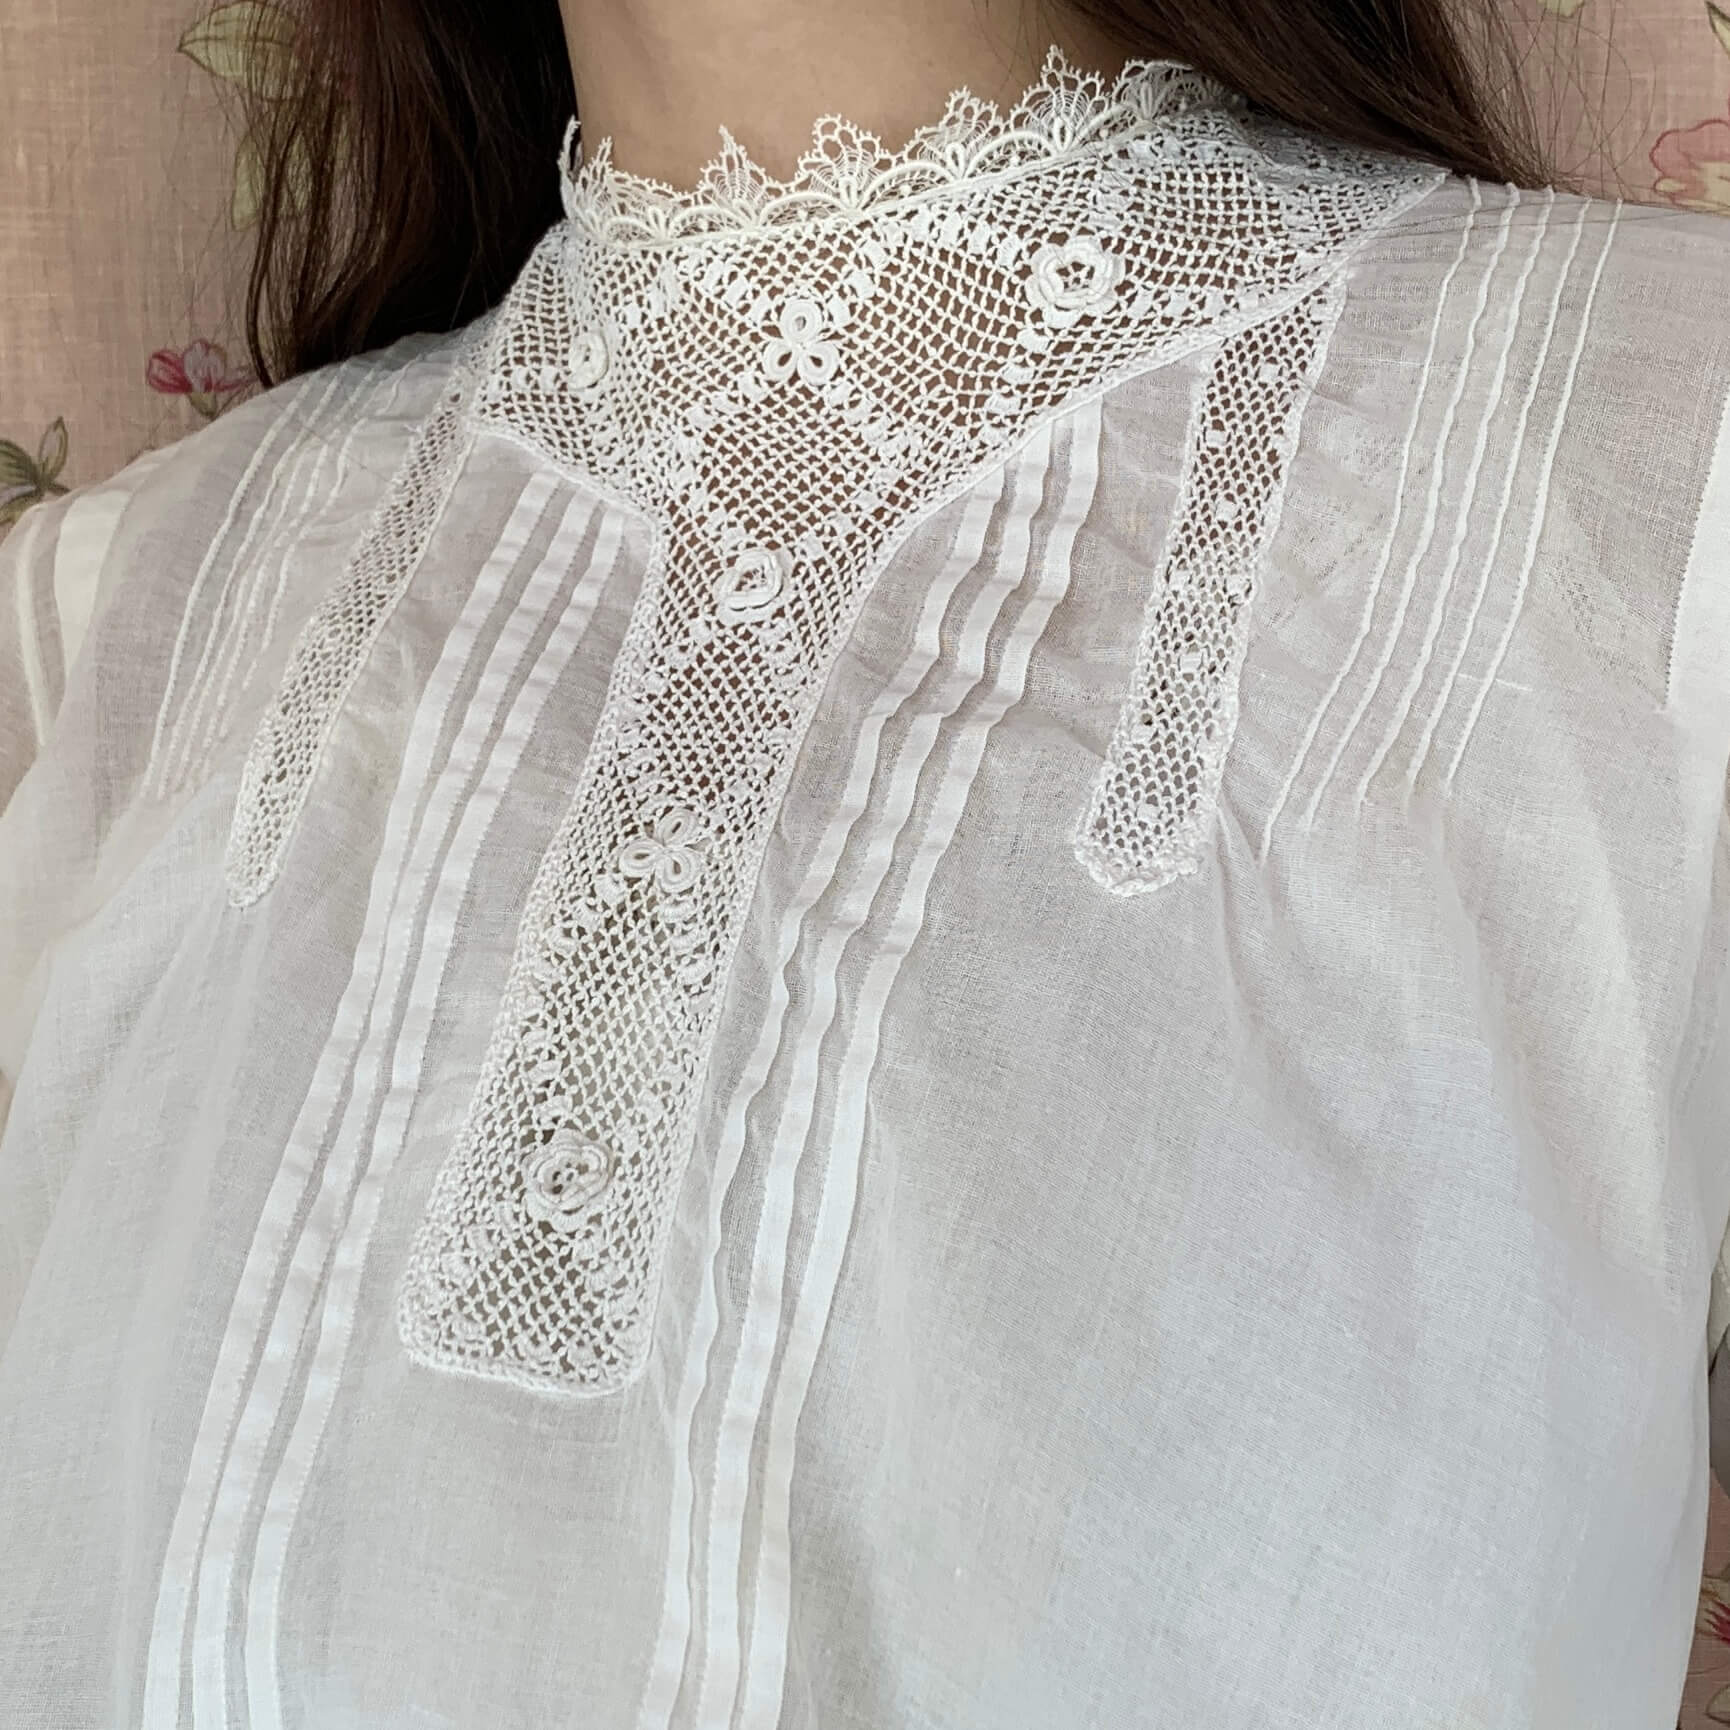 Irish crochet detail on a white edwardian top